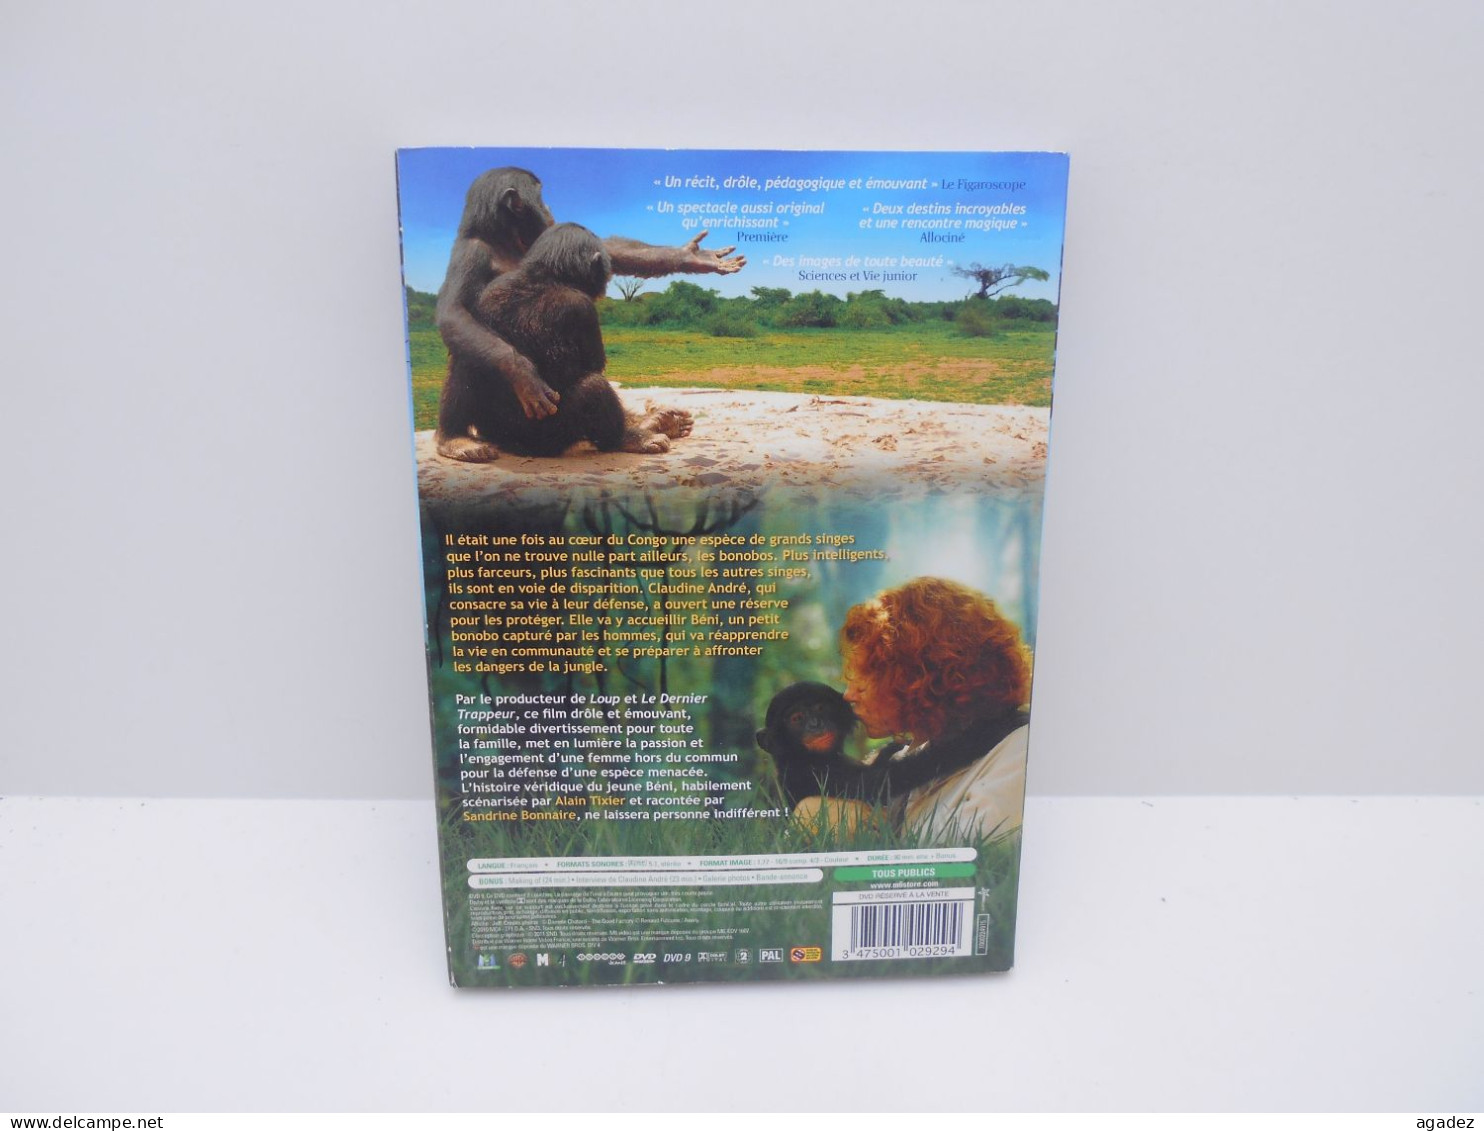 DVD Film Bonobos Alain Tixier  (singes) - Documentari